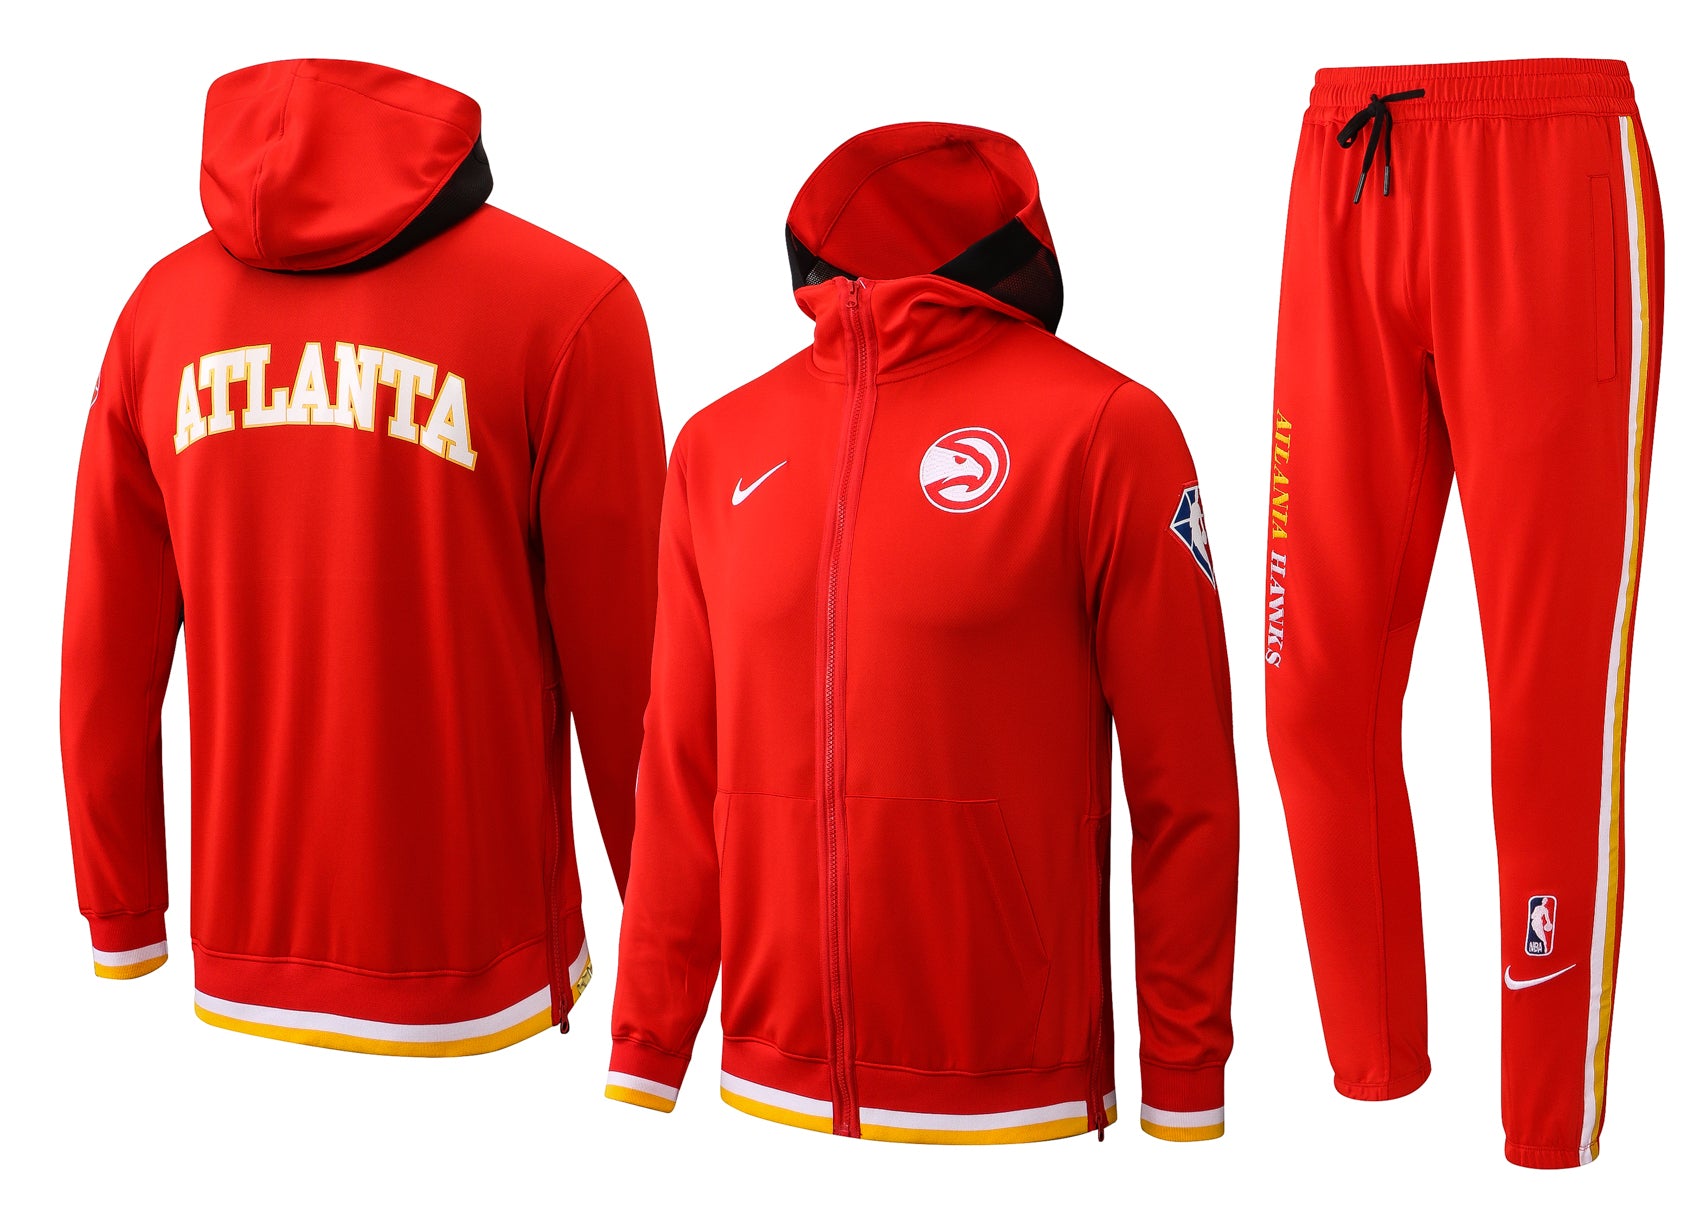 Atlanta hawks red suit